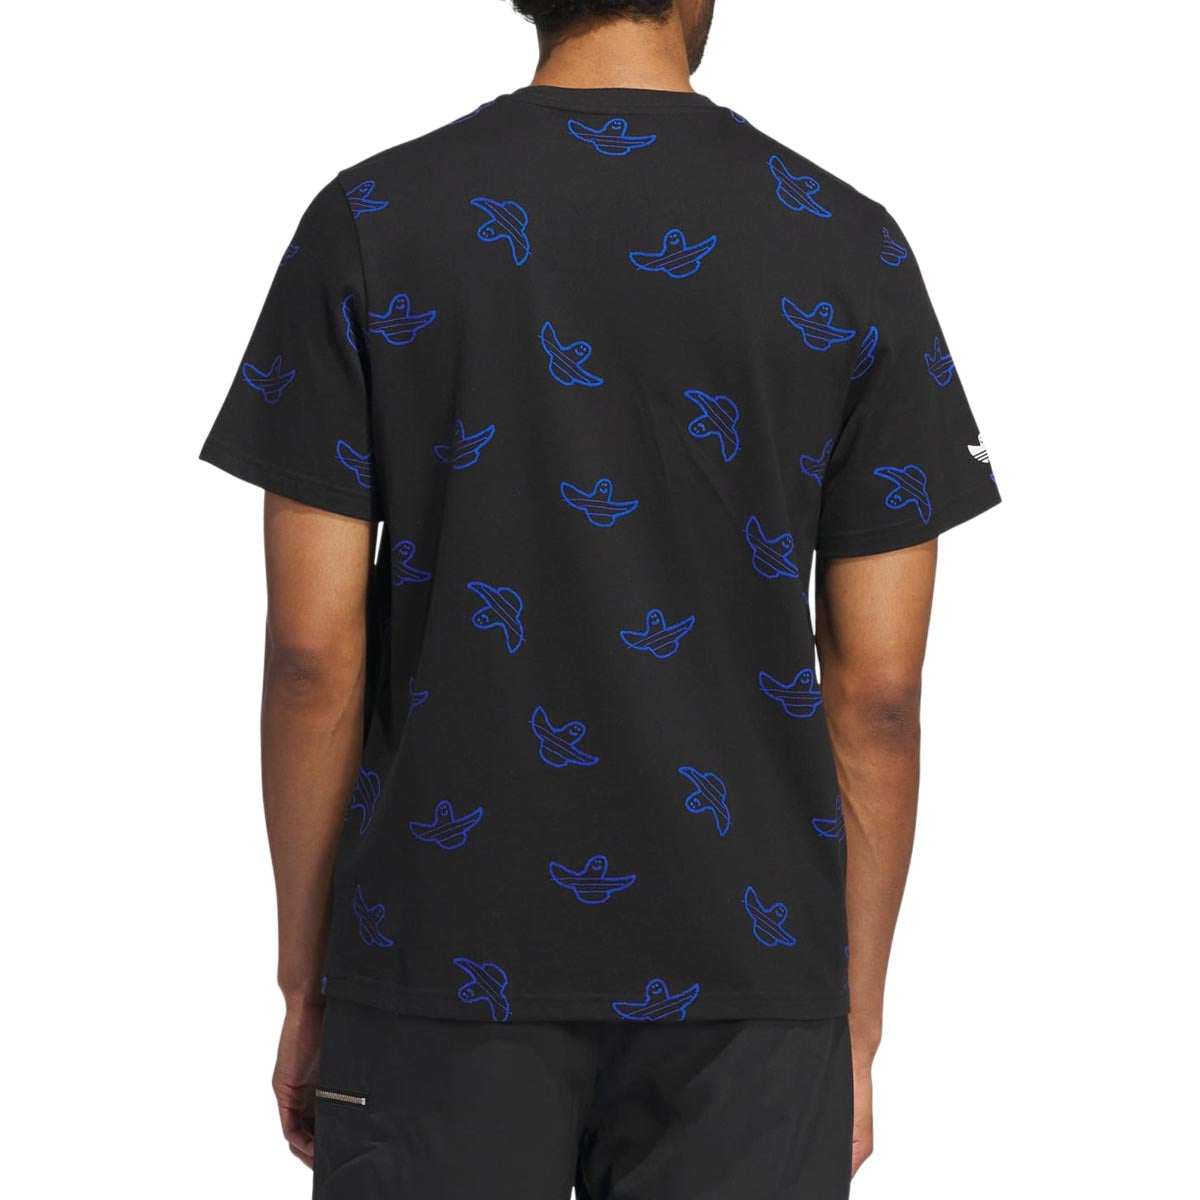 Adidas Shmoofoil All-Over-Print T-Shirt - Black/Royal Blue image 3